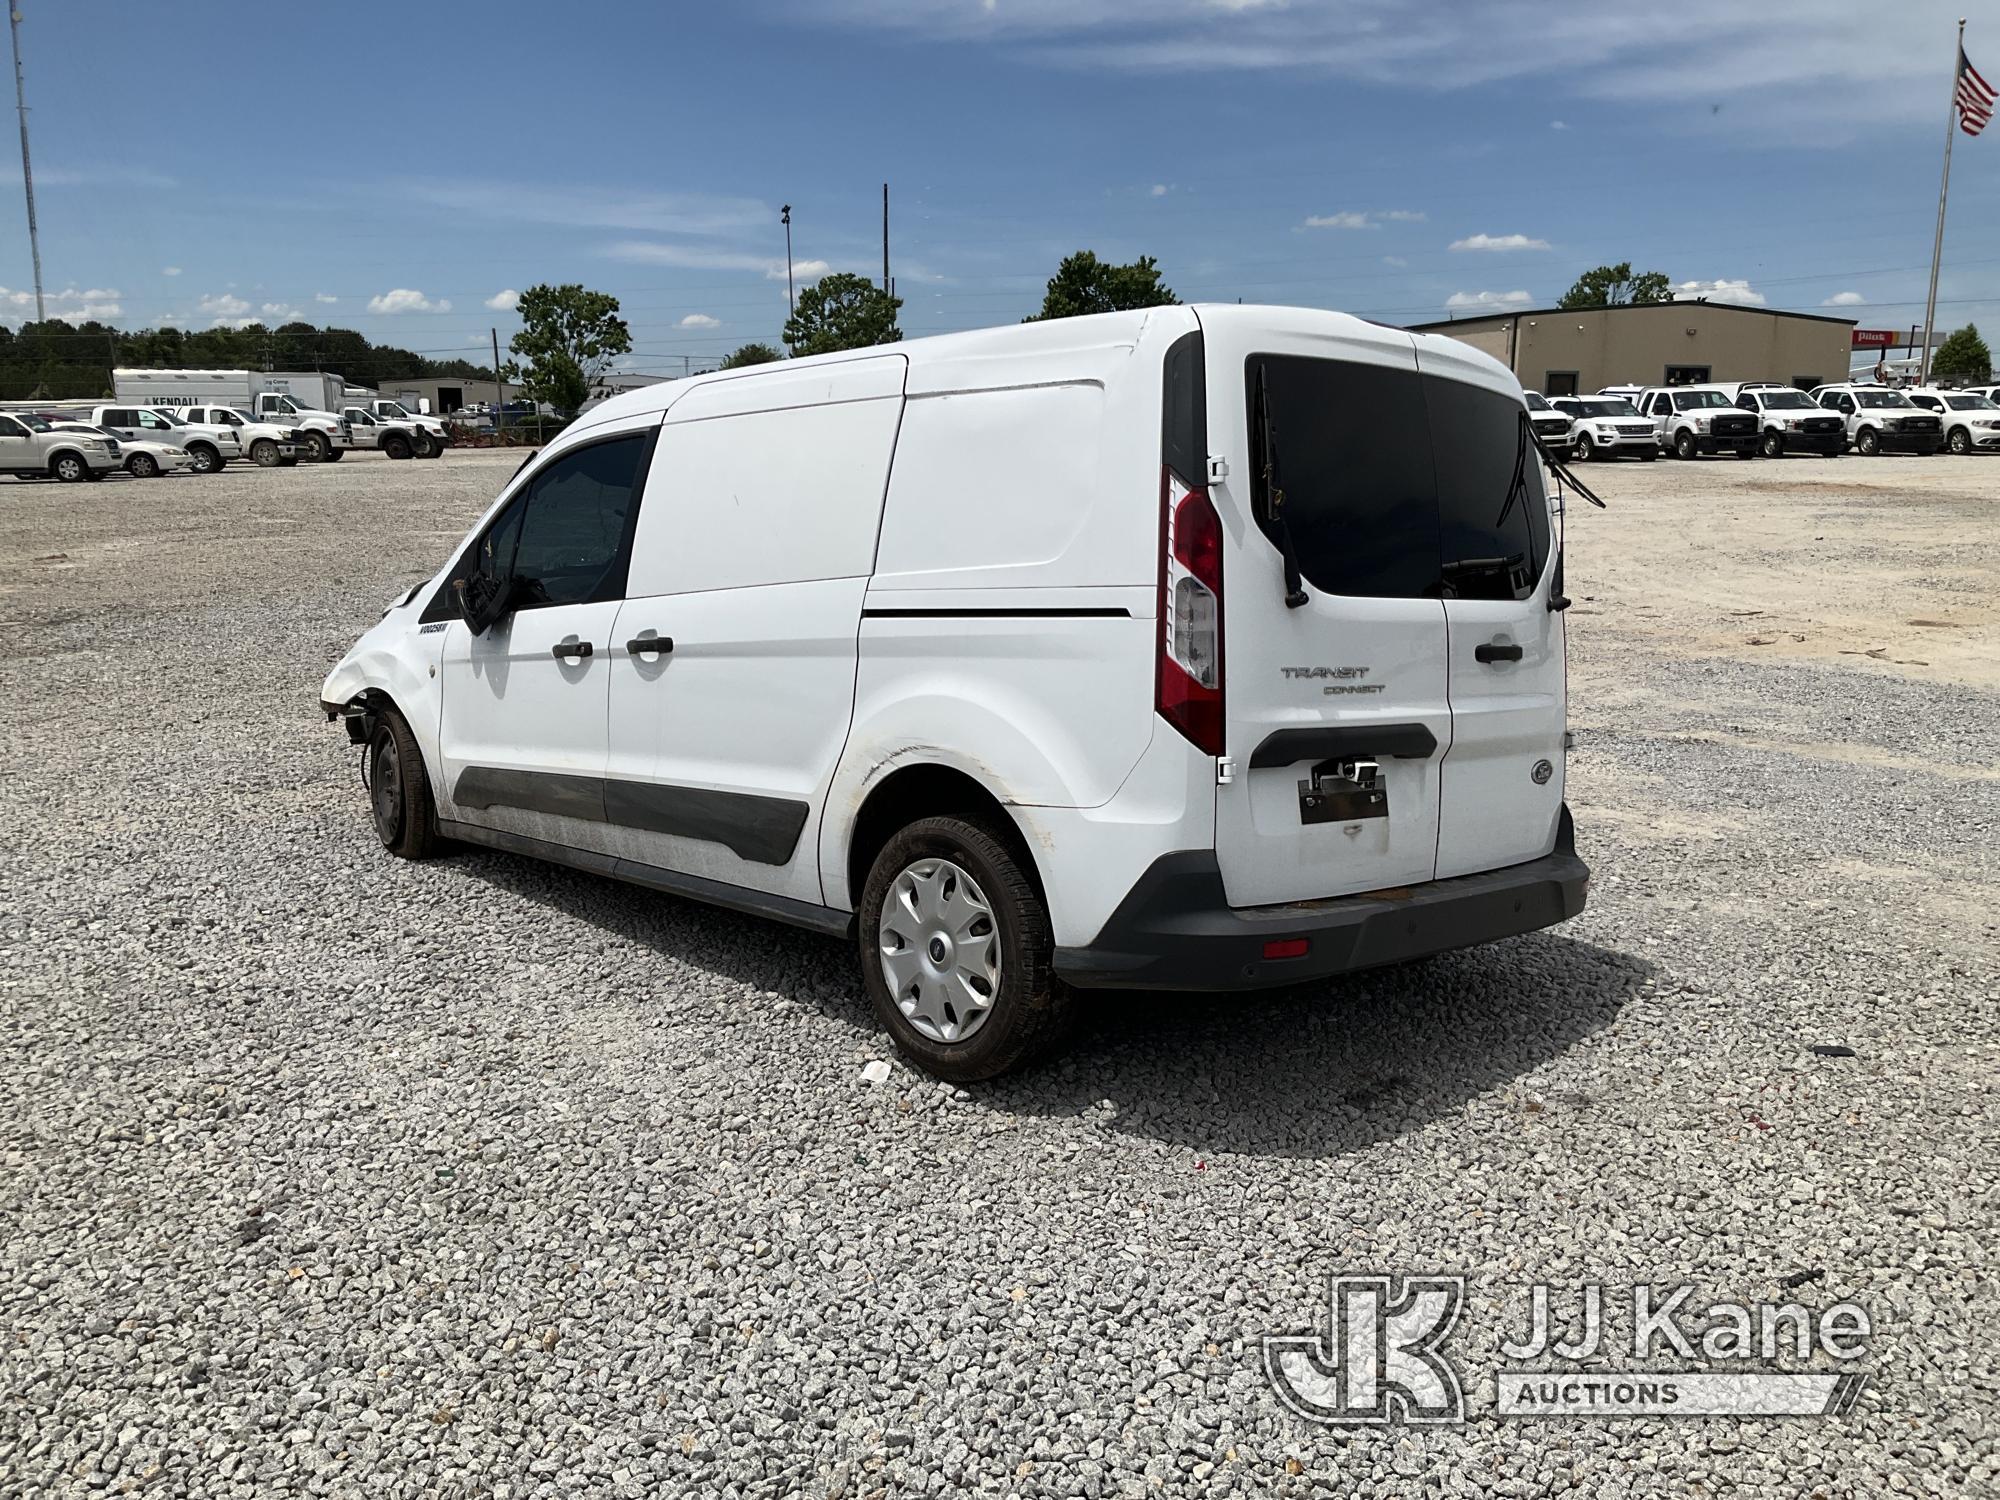 (Villa Rica, GA) 2016 Ford Transit Connect Mini Cargo Van, (GA Power Unit) Wrecked, Not Running, Con